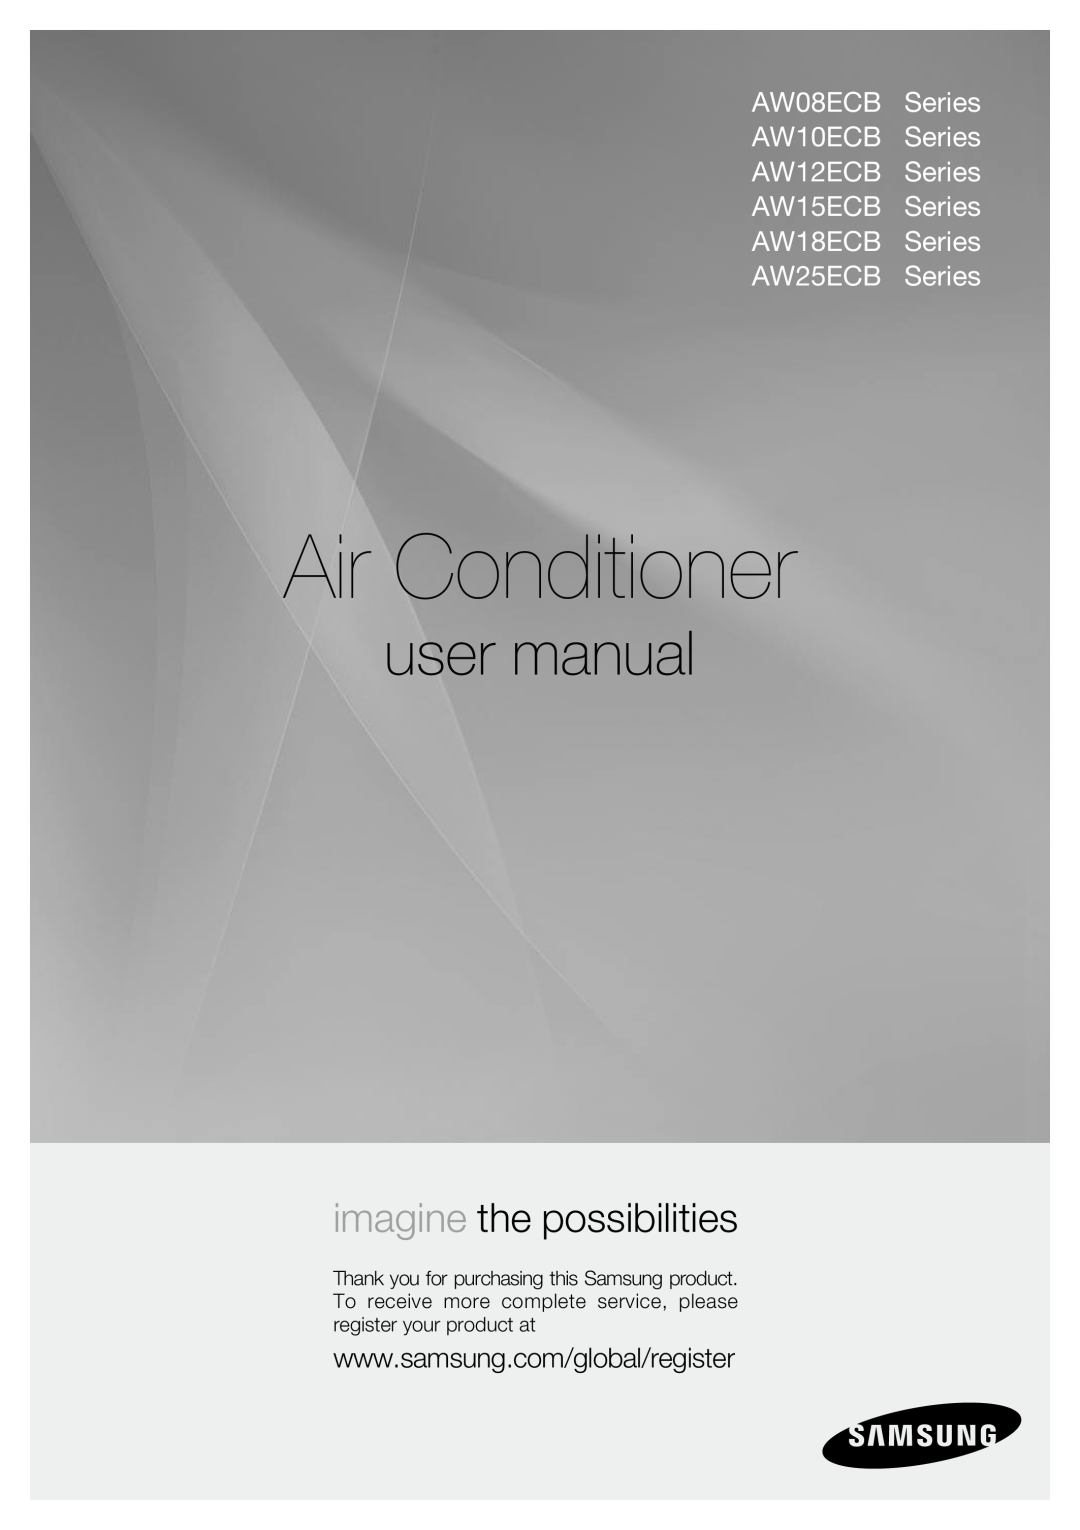 Samsung AW15ECB, AW12ECB, AW10ECB user manual Air Conditioner, imagine the possibilities, AW18ECB Series AW25ECB Series 